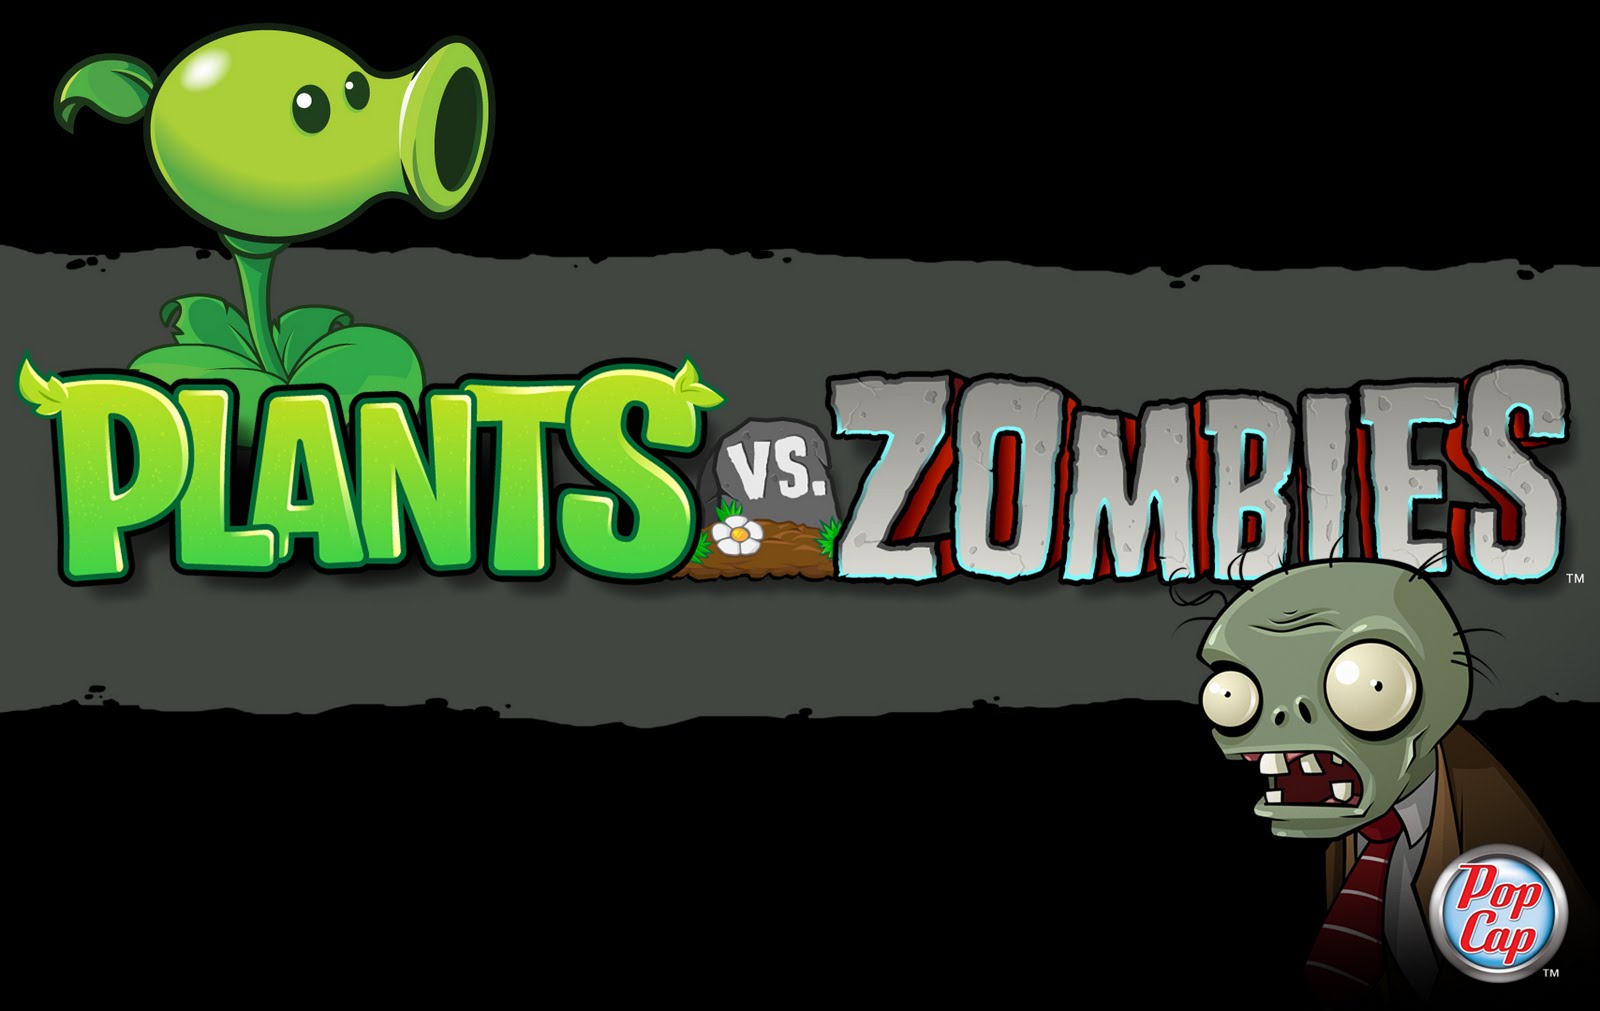 Mi Subida] Plantas vs Zombies [Pc][1 Link][Mf] | Caleta - Tu Sitio de ...